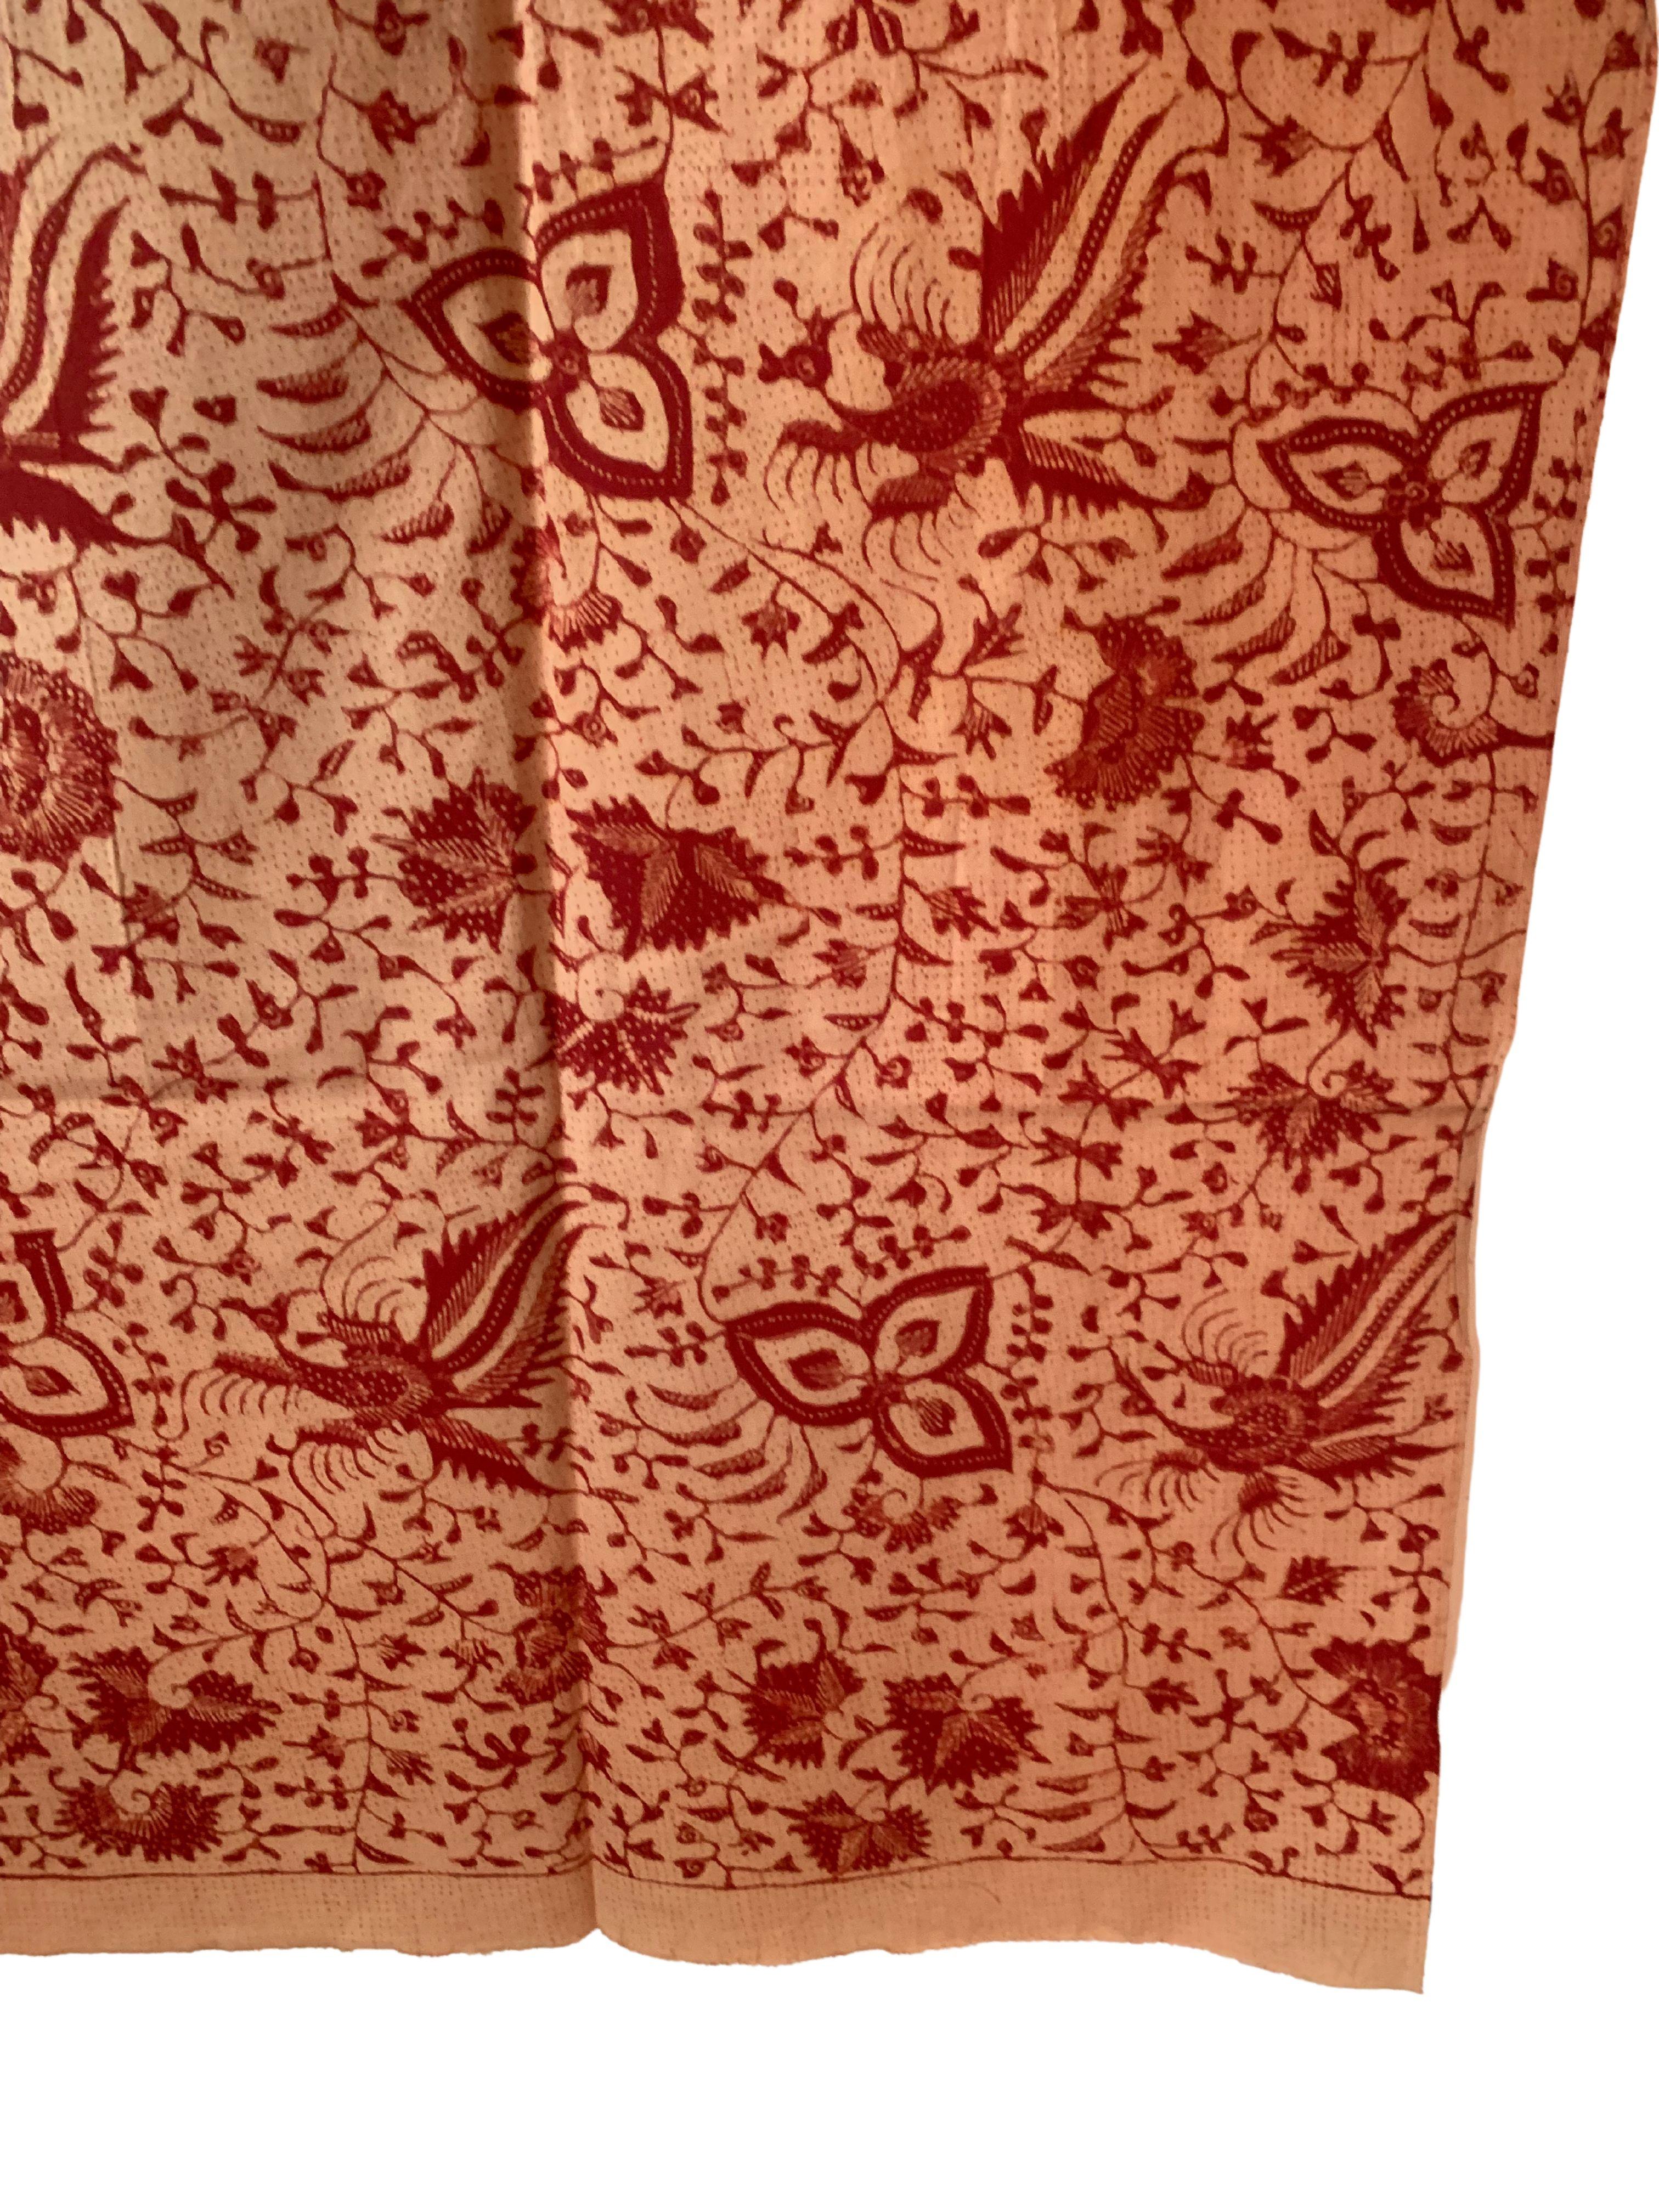 batik fabric origin